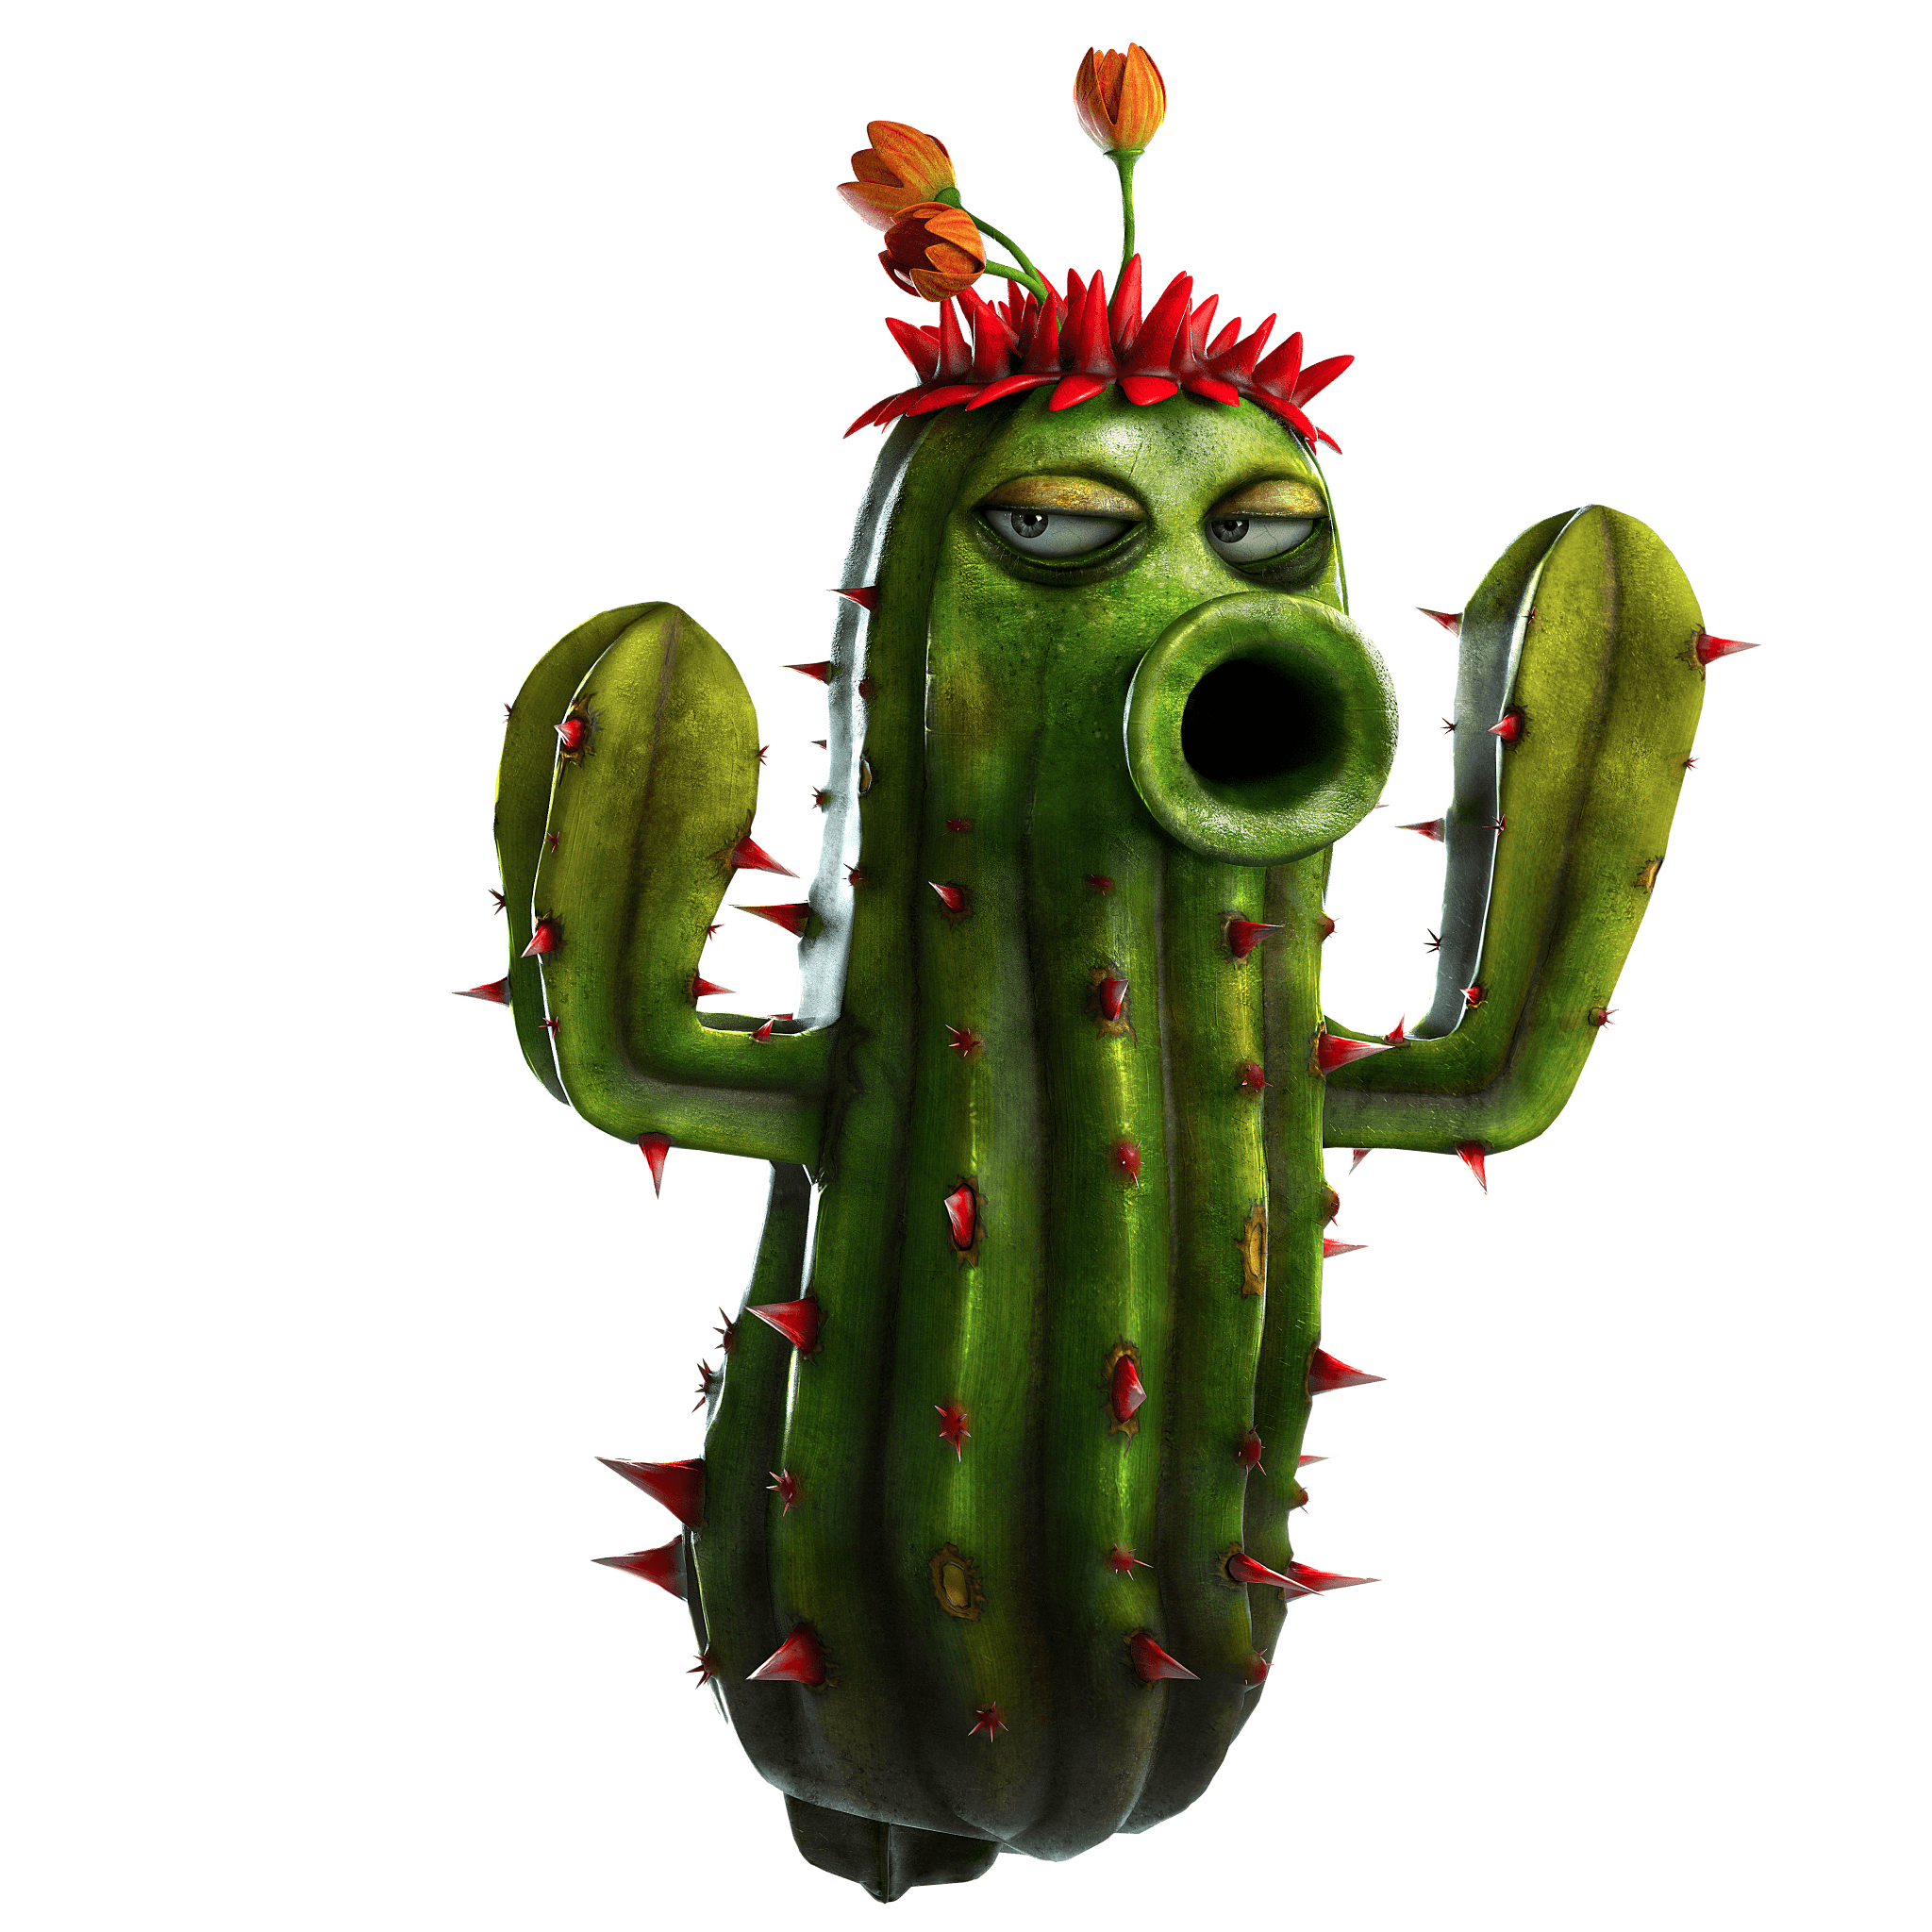 Customization, Plants vs. Zombies Wiki